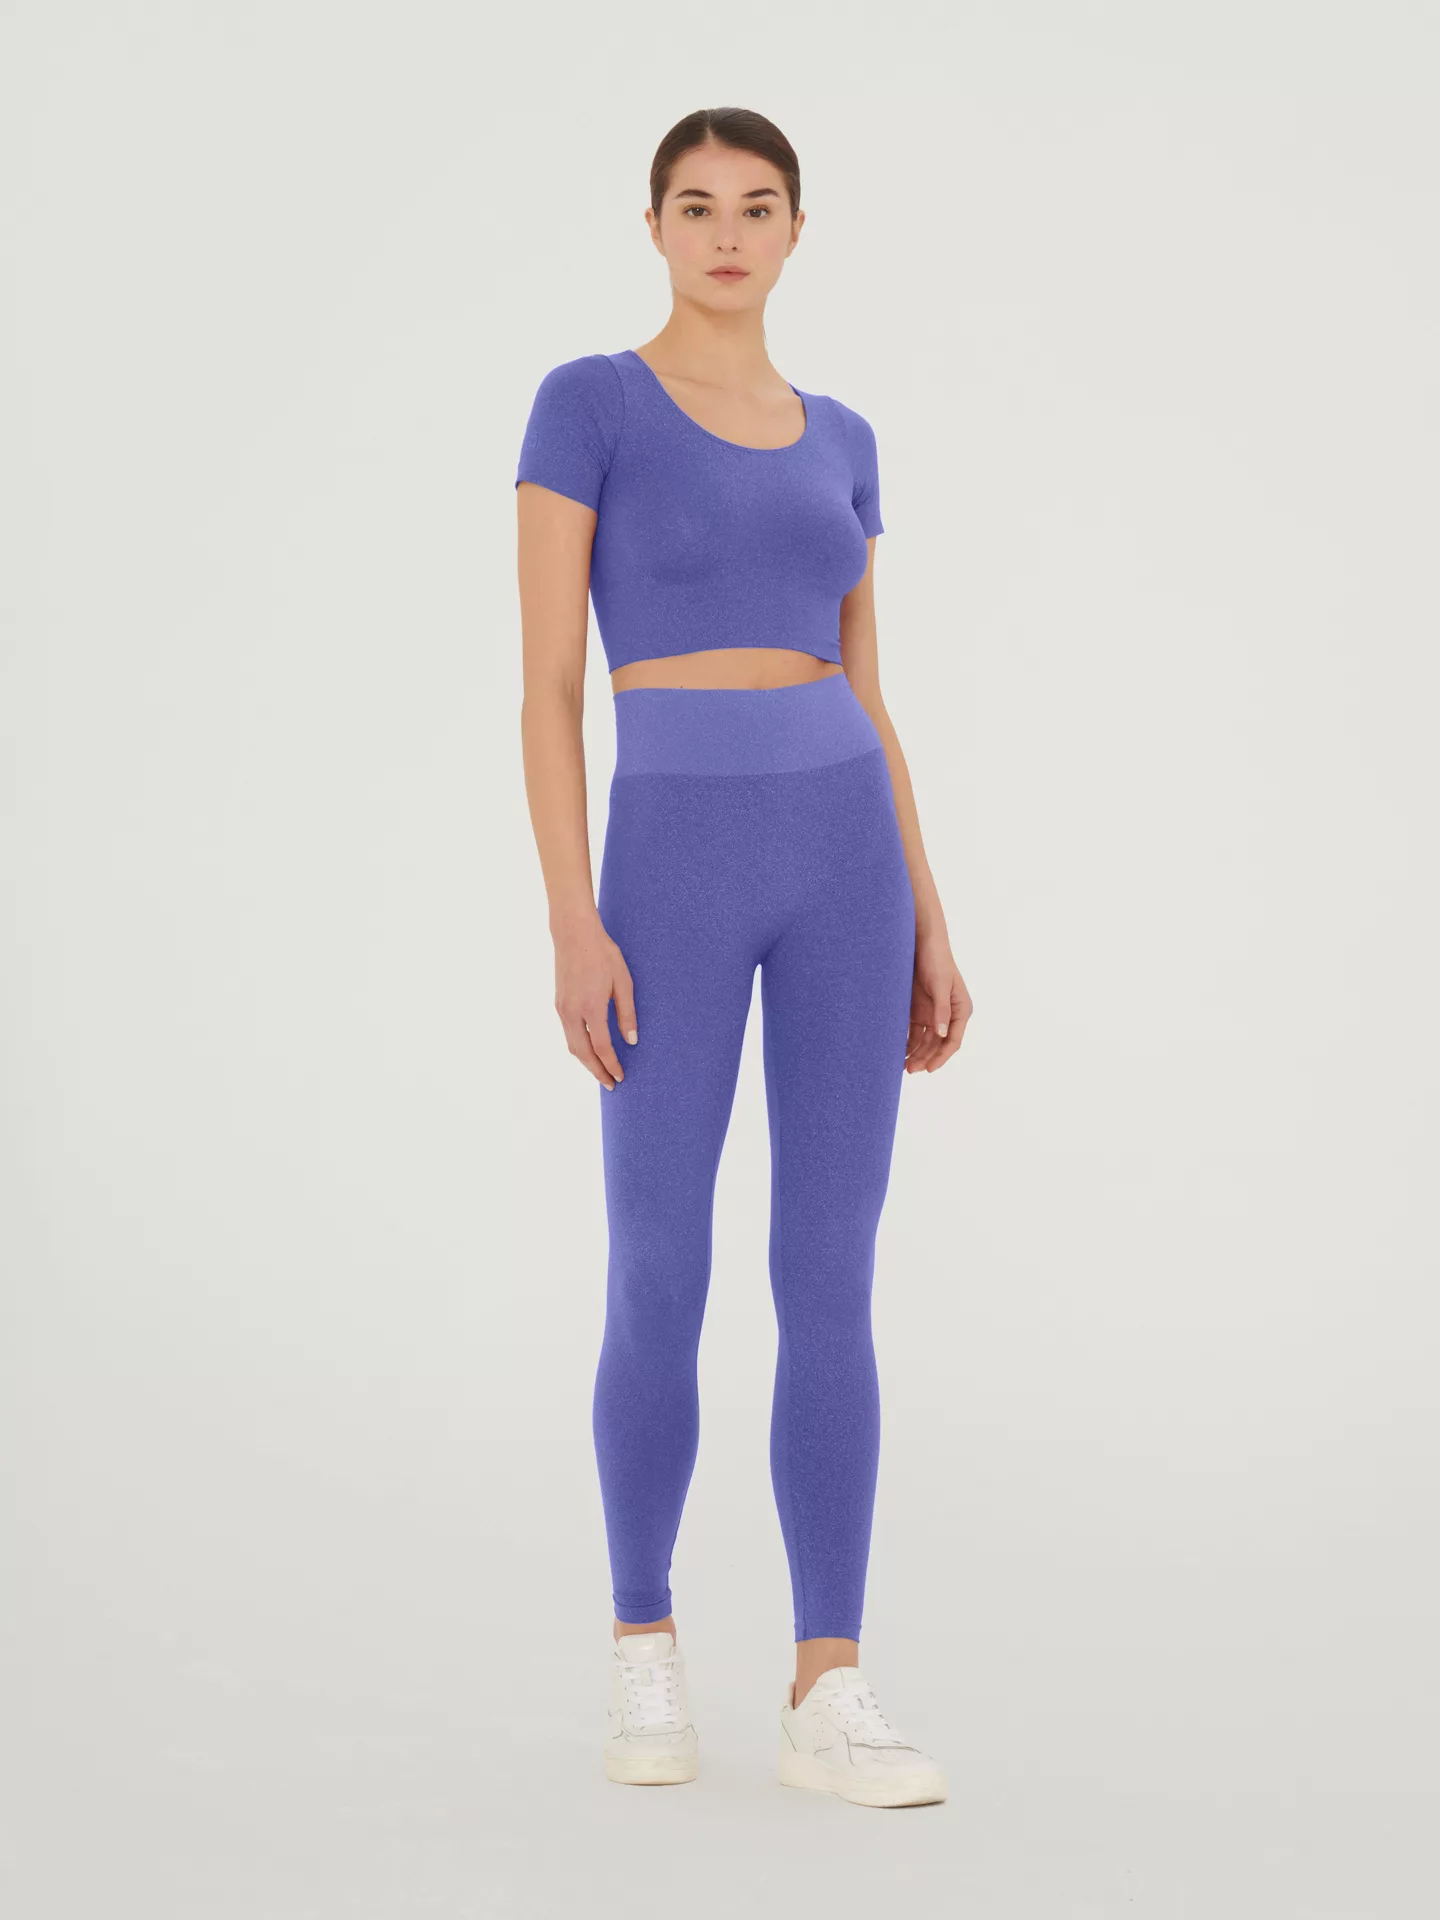 Wolford - Shiny Leggings, Frau, ultra violet/light aquamarine, Größe: XS günstig online kaufen